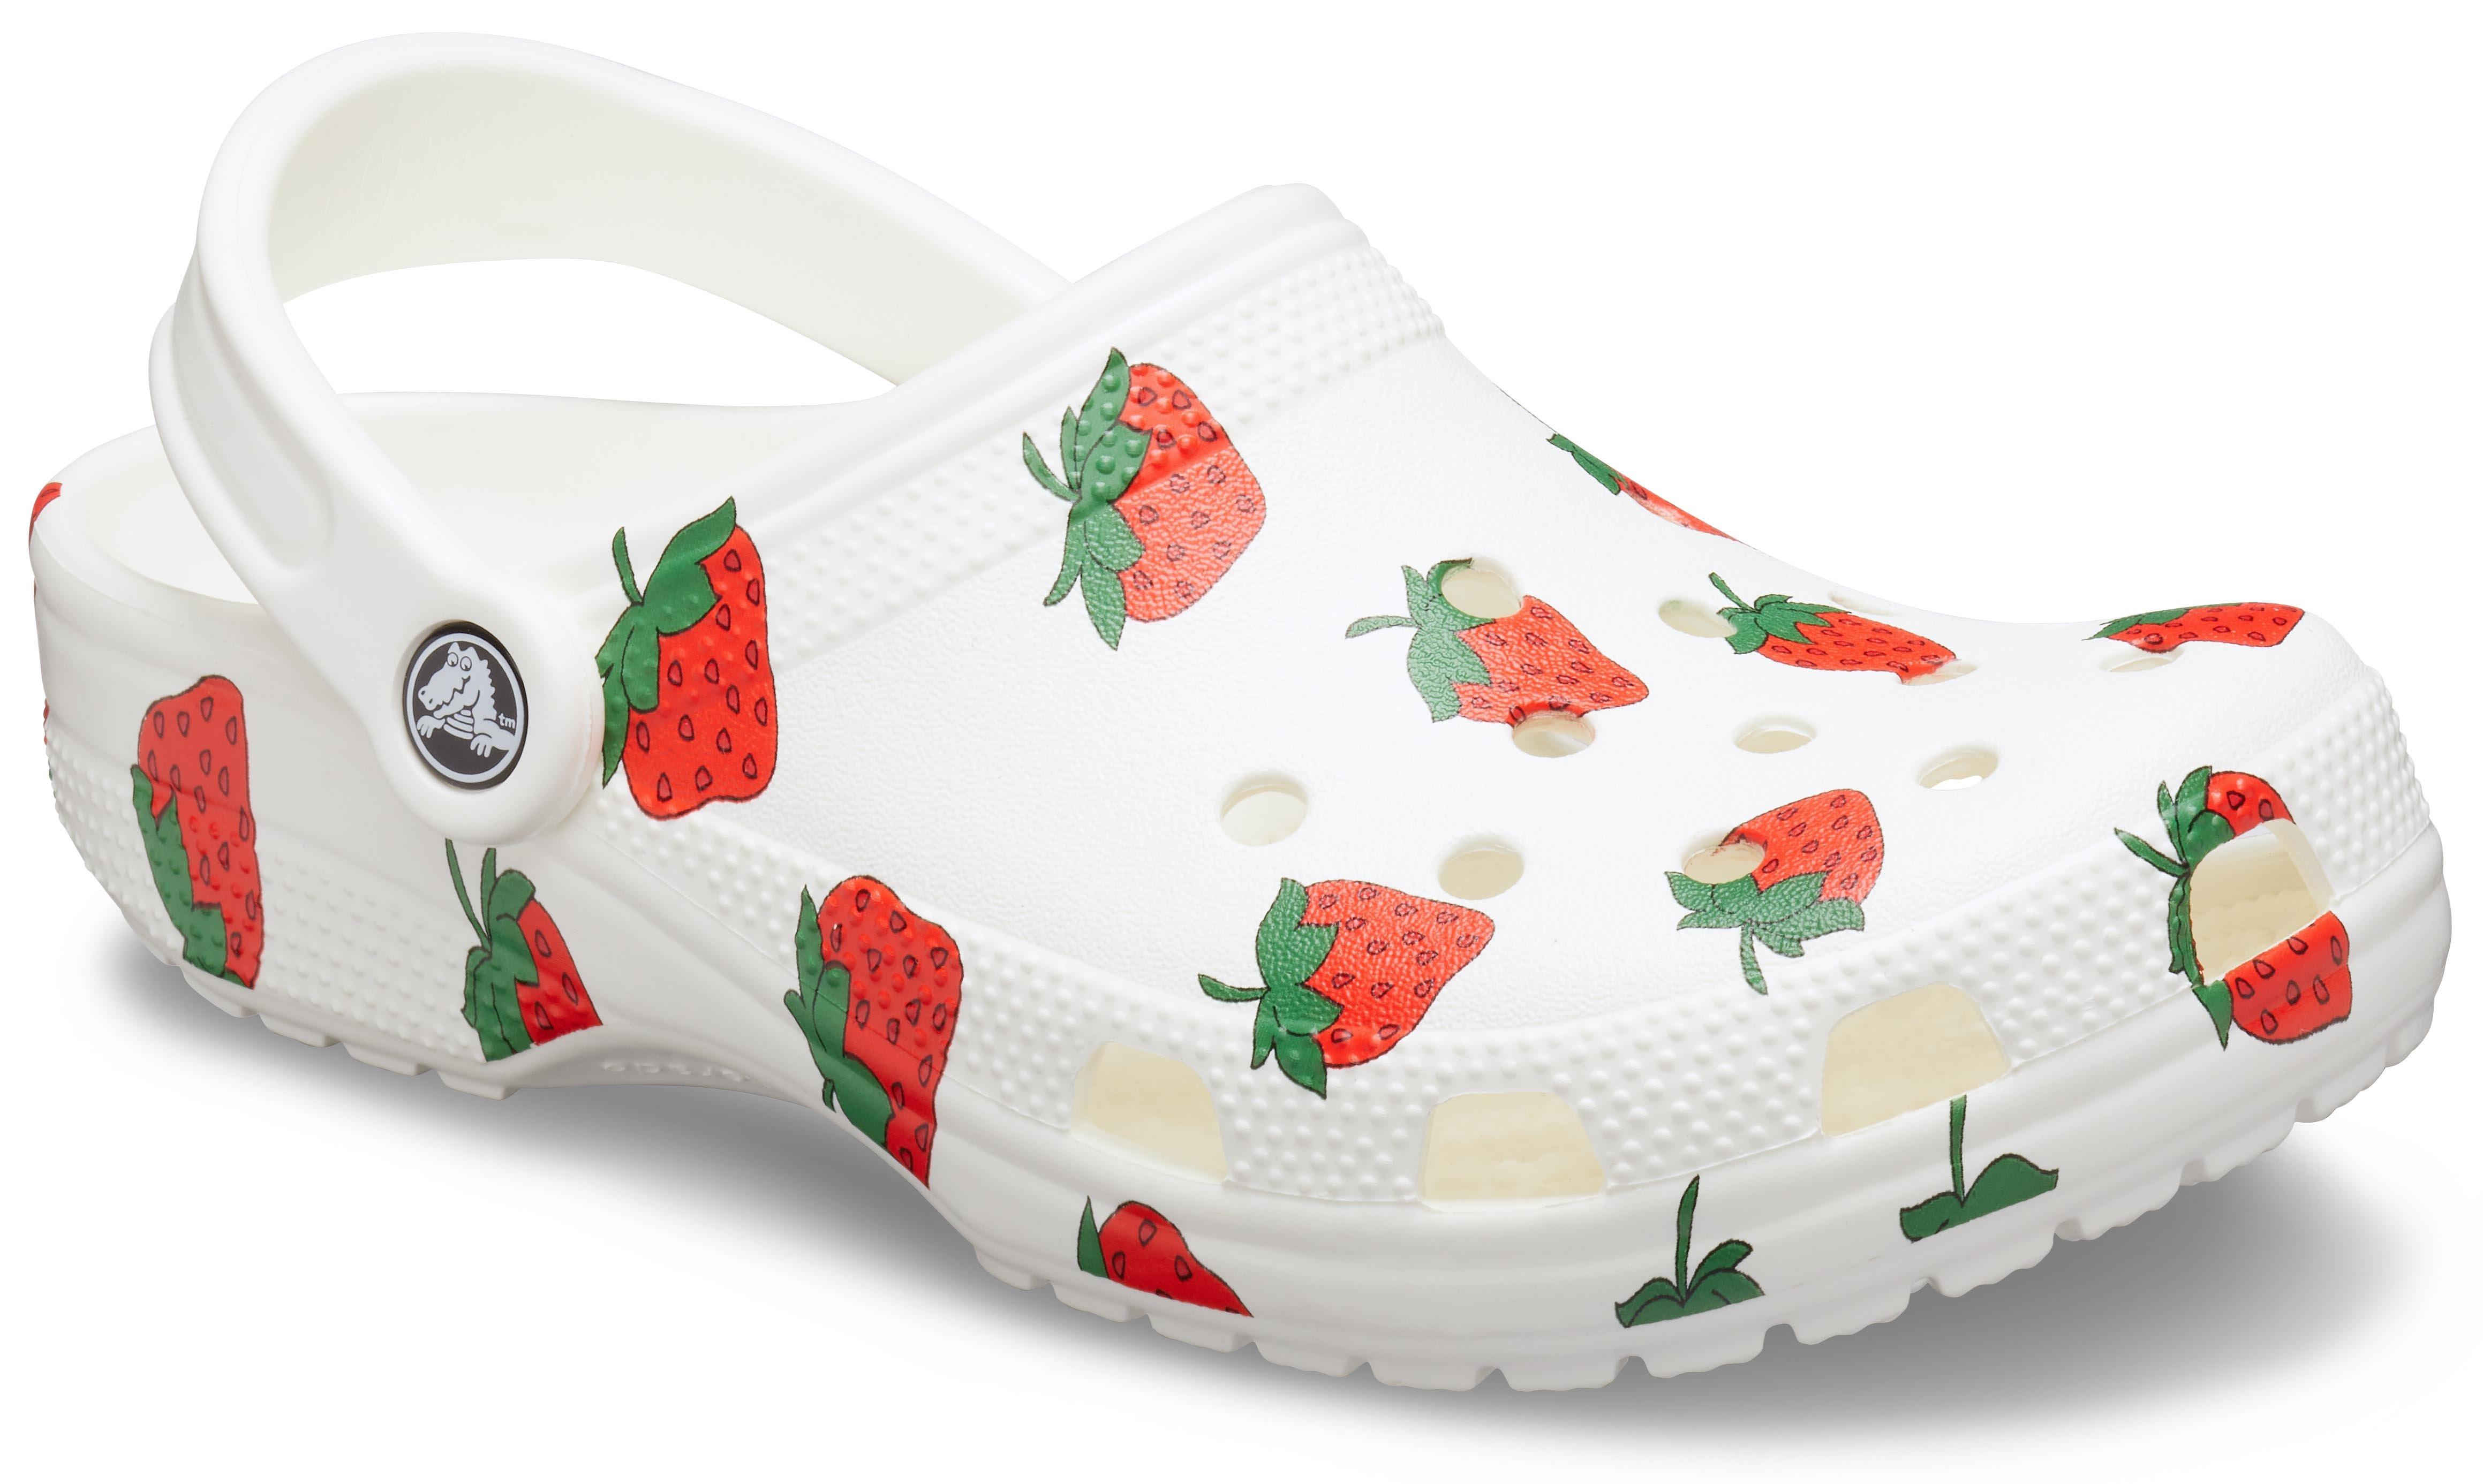 women's strawberry crocs